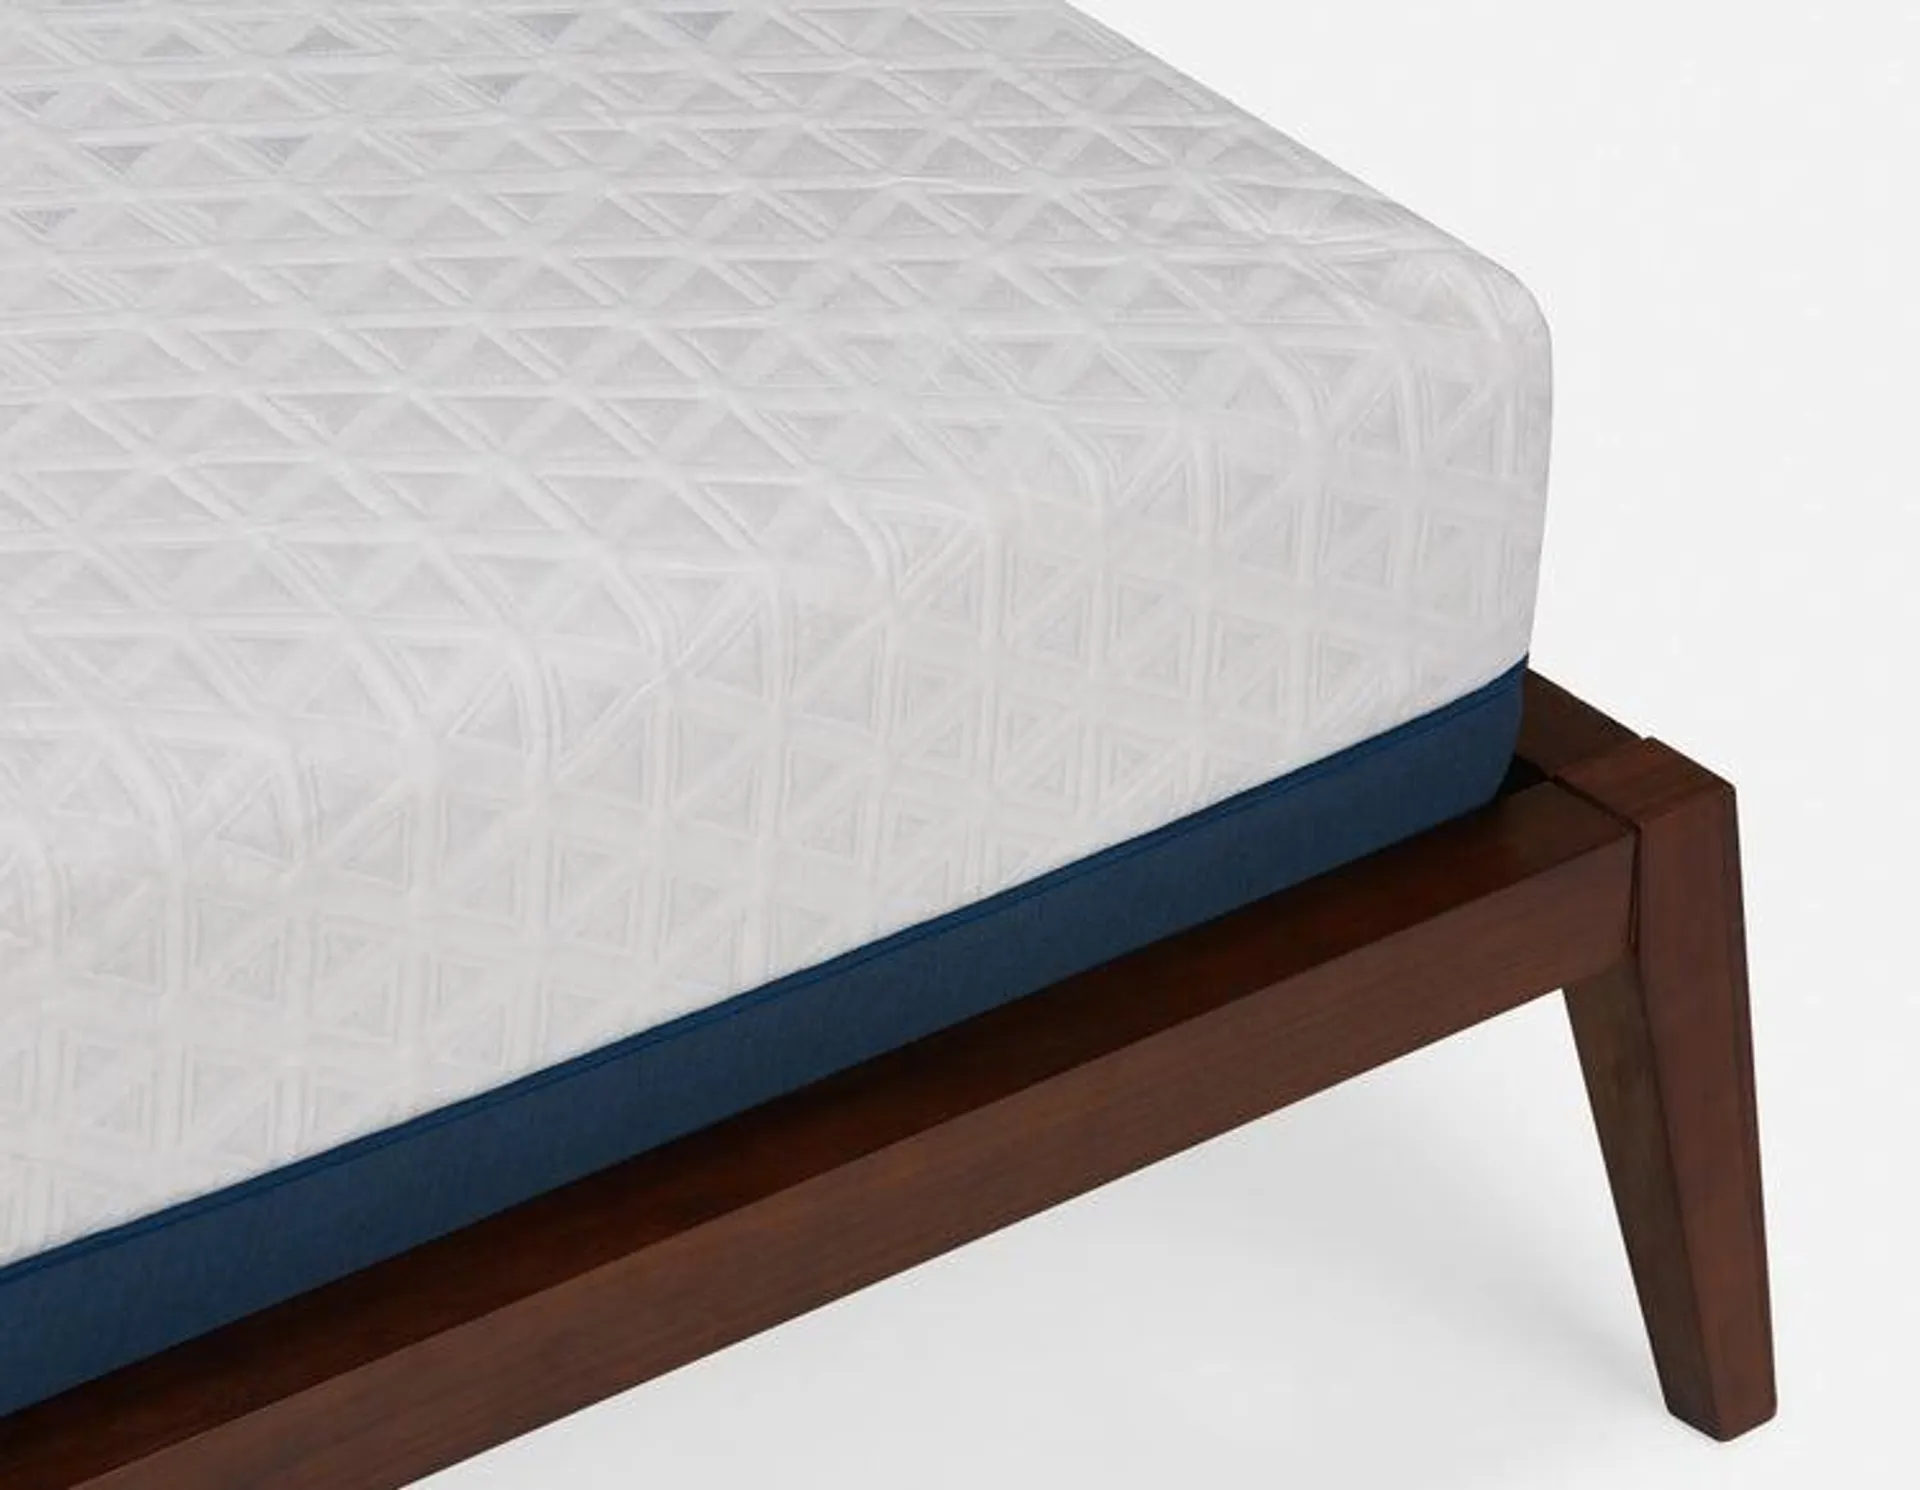 ICY 10 Queen size mattress